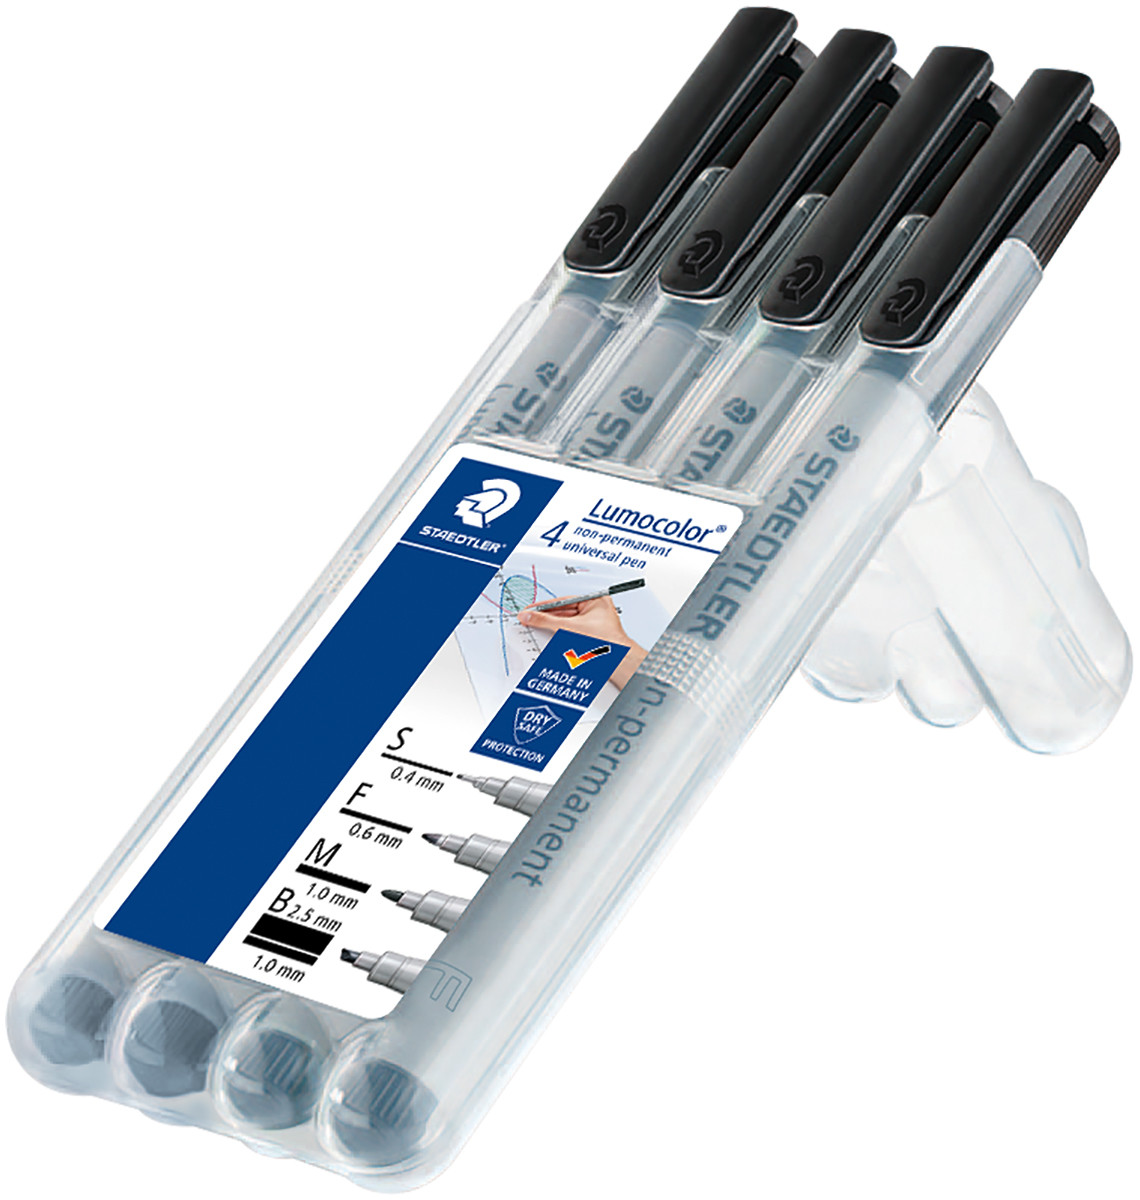 Staedtler Lumocolor Non-Permanent Pen - Assorted Tip Sizes - Black (Pack of 4)